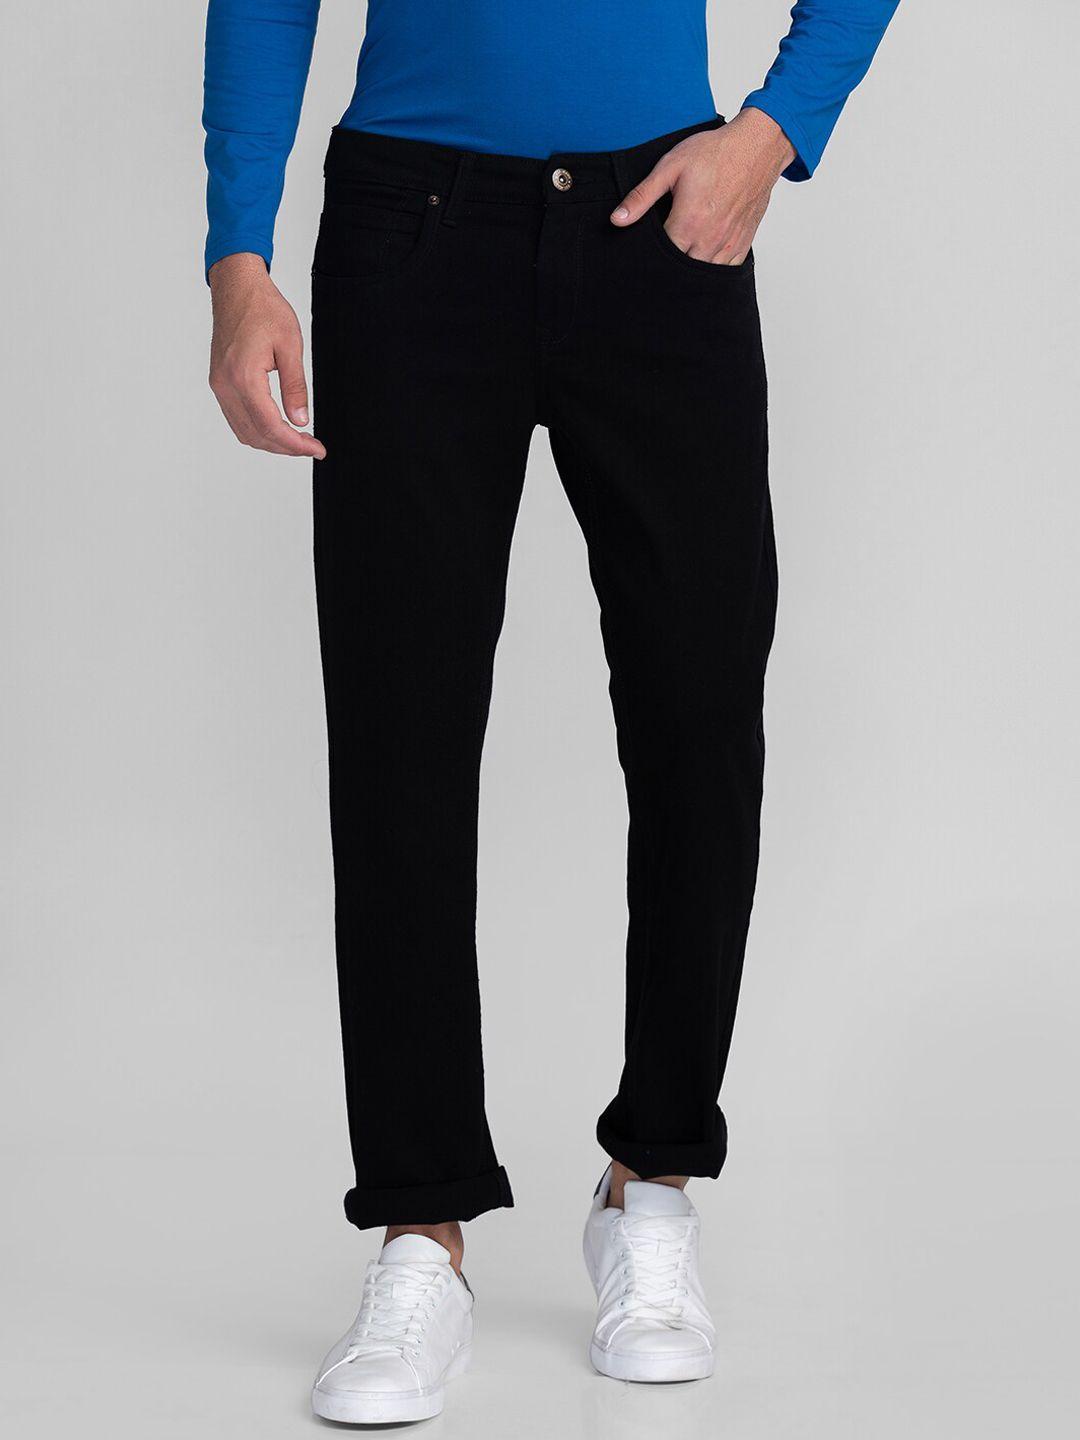 globus-men-black-tapered-fit-stretchable-cotton-jeans